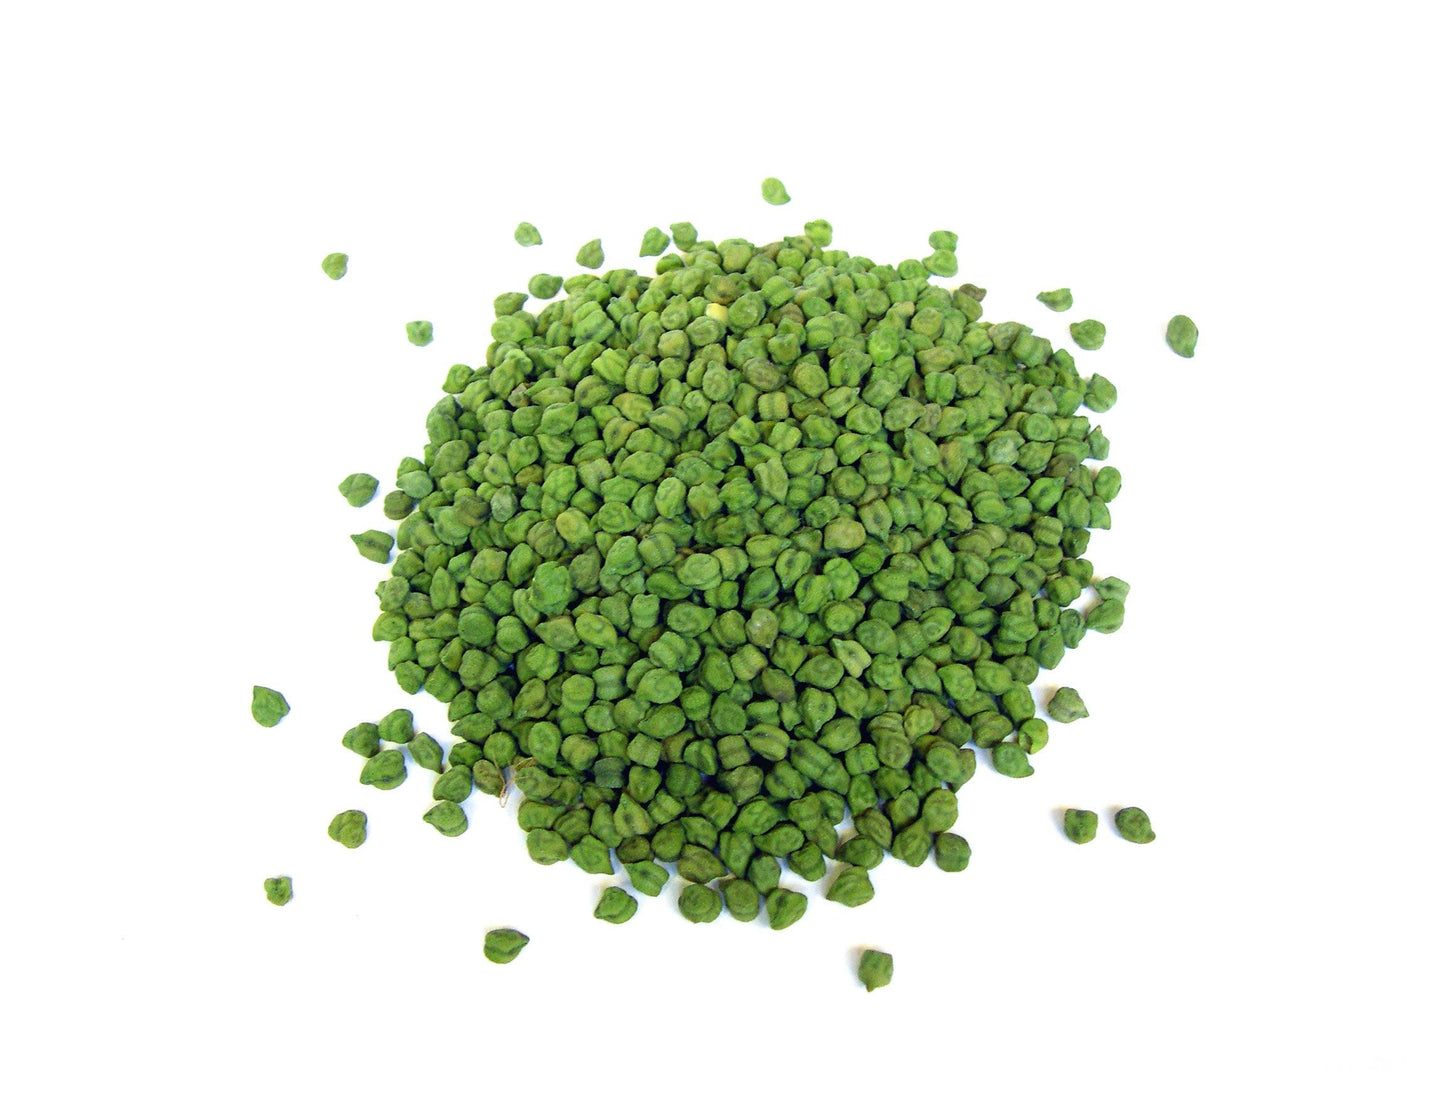 25 GREEN CHICK PEA Chickpea aka Garbanzo Bean Green Chana Cicer Arietinum Legume Vegetable Seeds